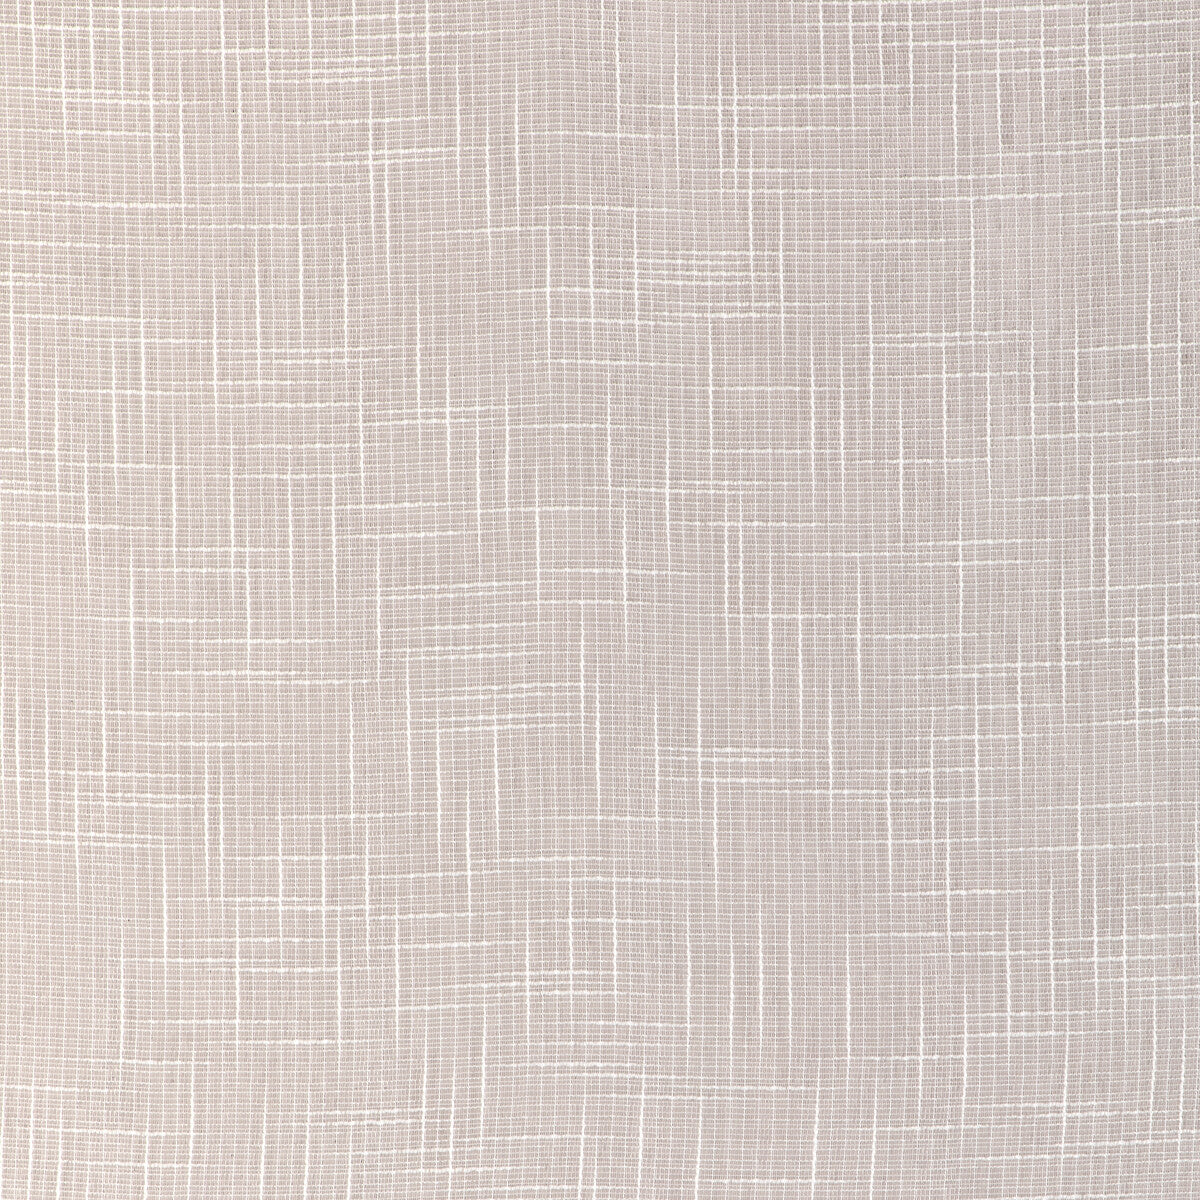 Kravet Basics fabric in 90035-11 color - pattern 90035.11.0 - by Kravet Basics in the Sheer Outlook collection